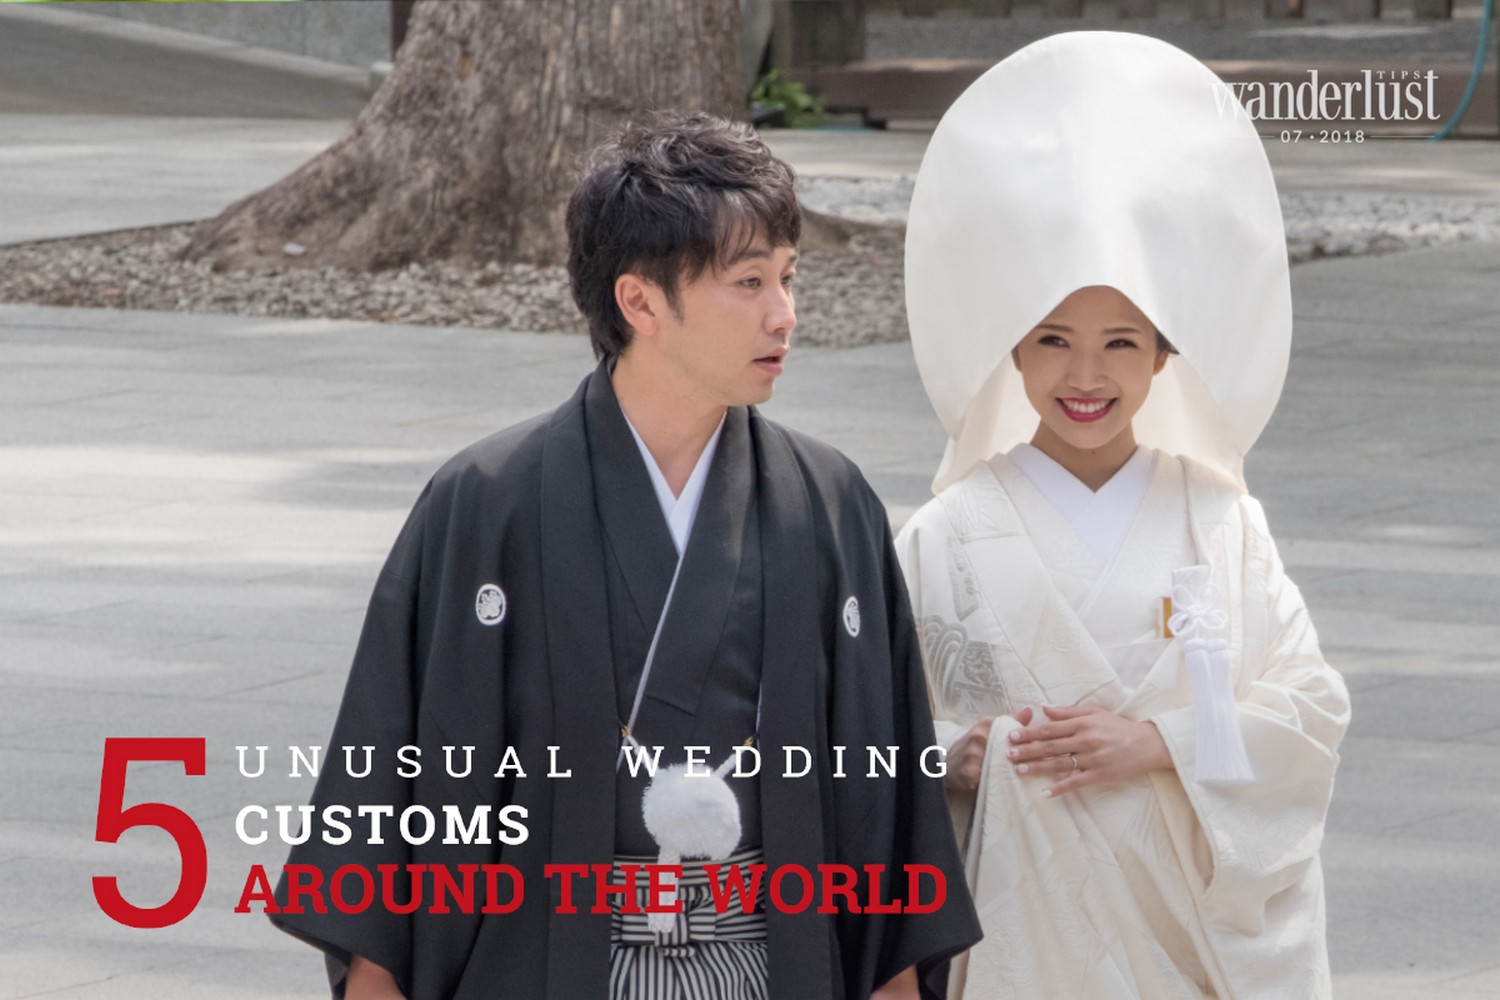 Wanderlust Tips Magazine | 5 unusual wedding customs around the world